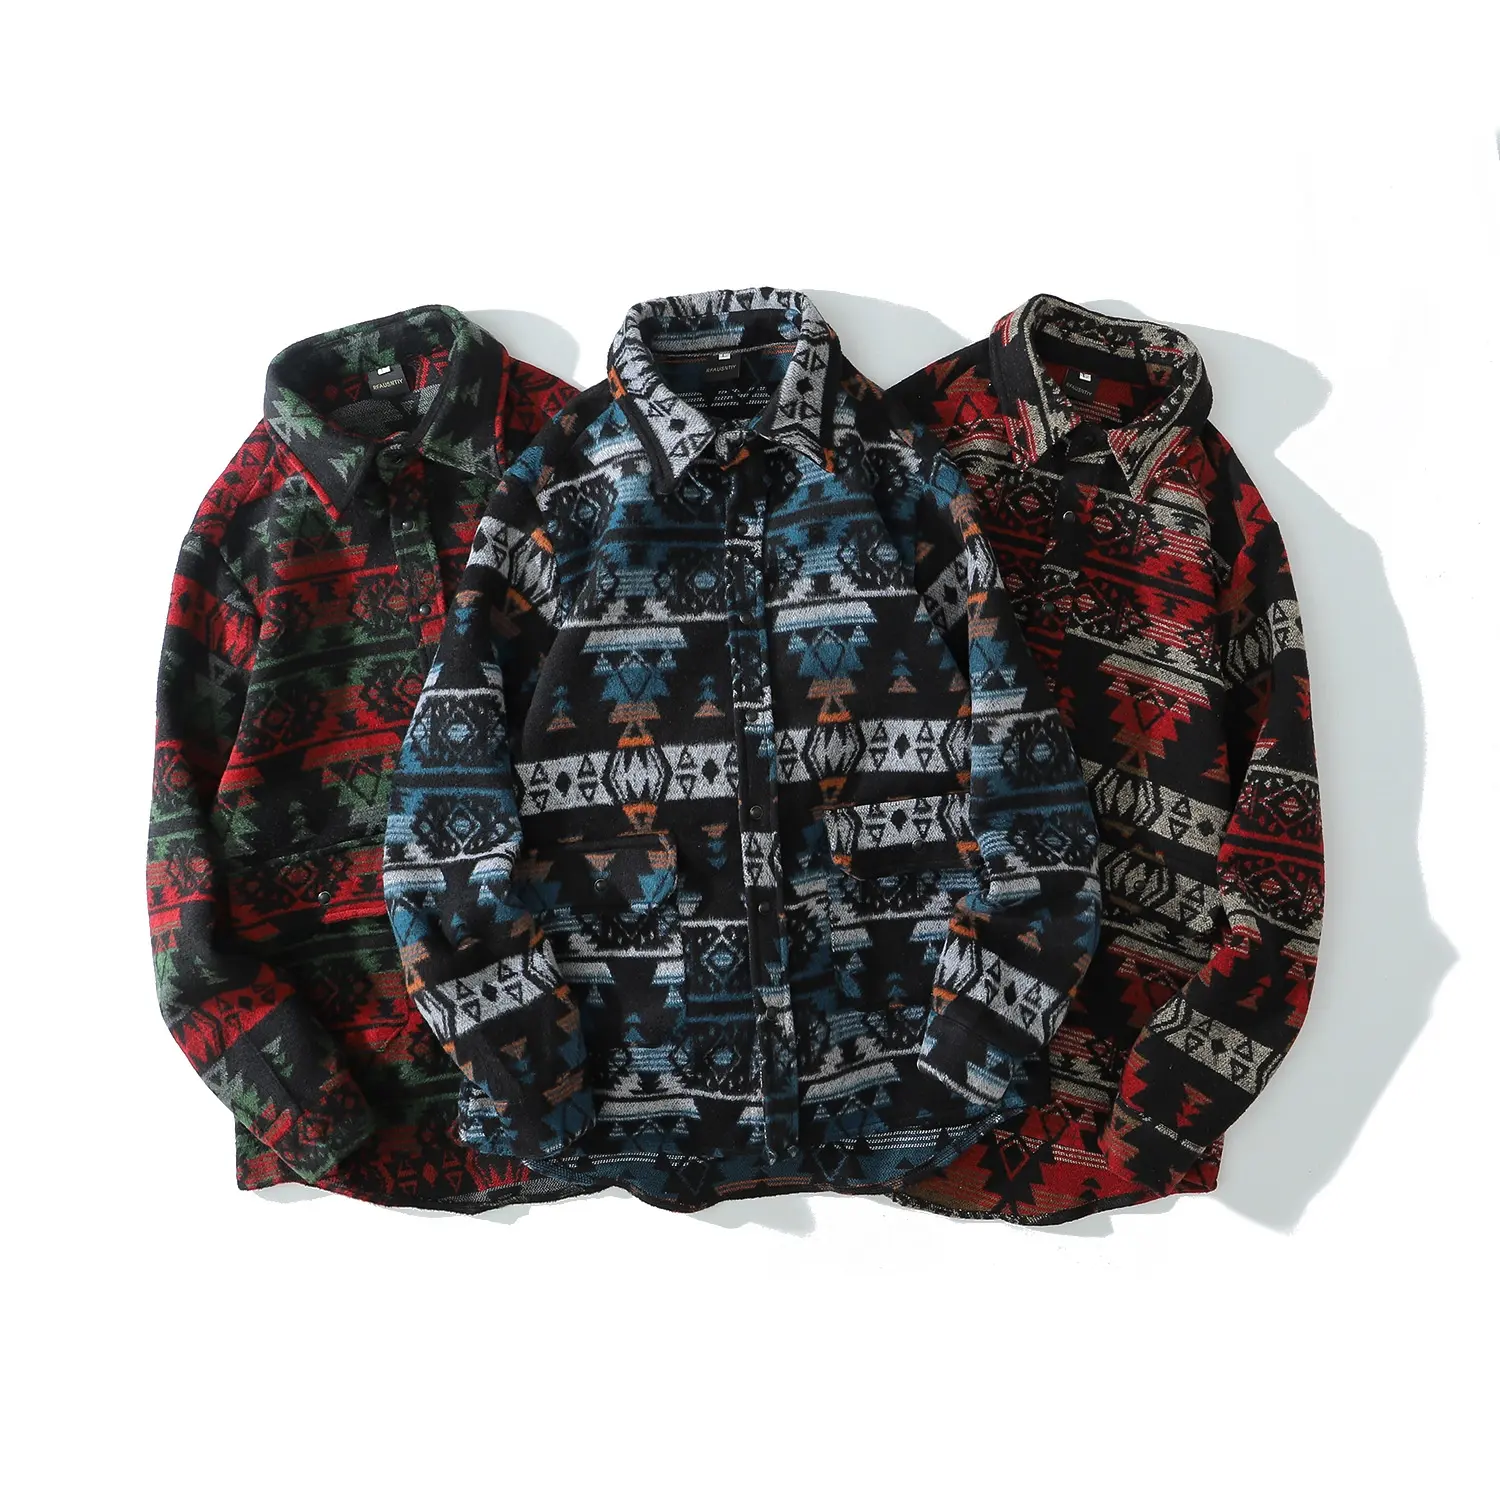 Western Style Aztec Jacket Men's Autumn Winter Plus Size Woolen Warm Ethnic Vintage Overshirt Jacket With Pocket For Men